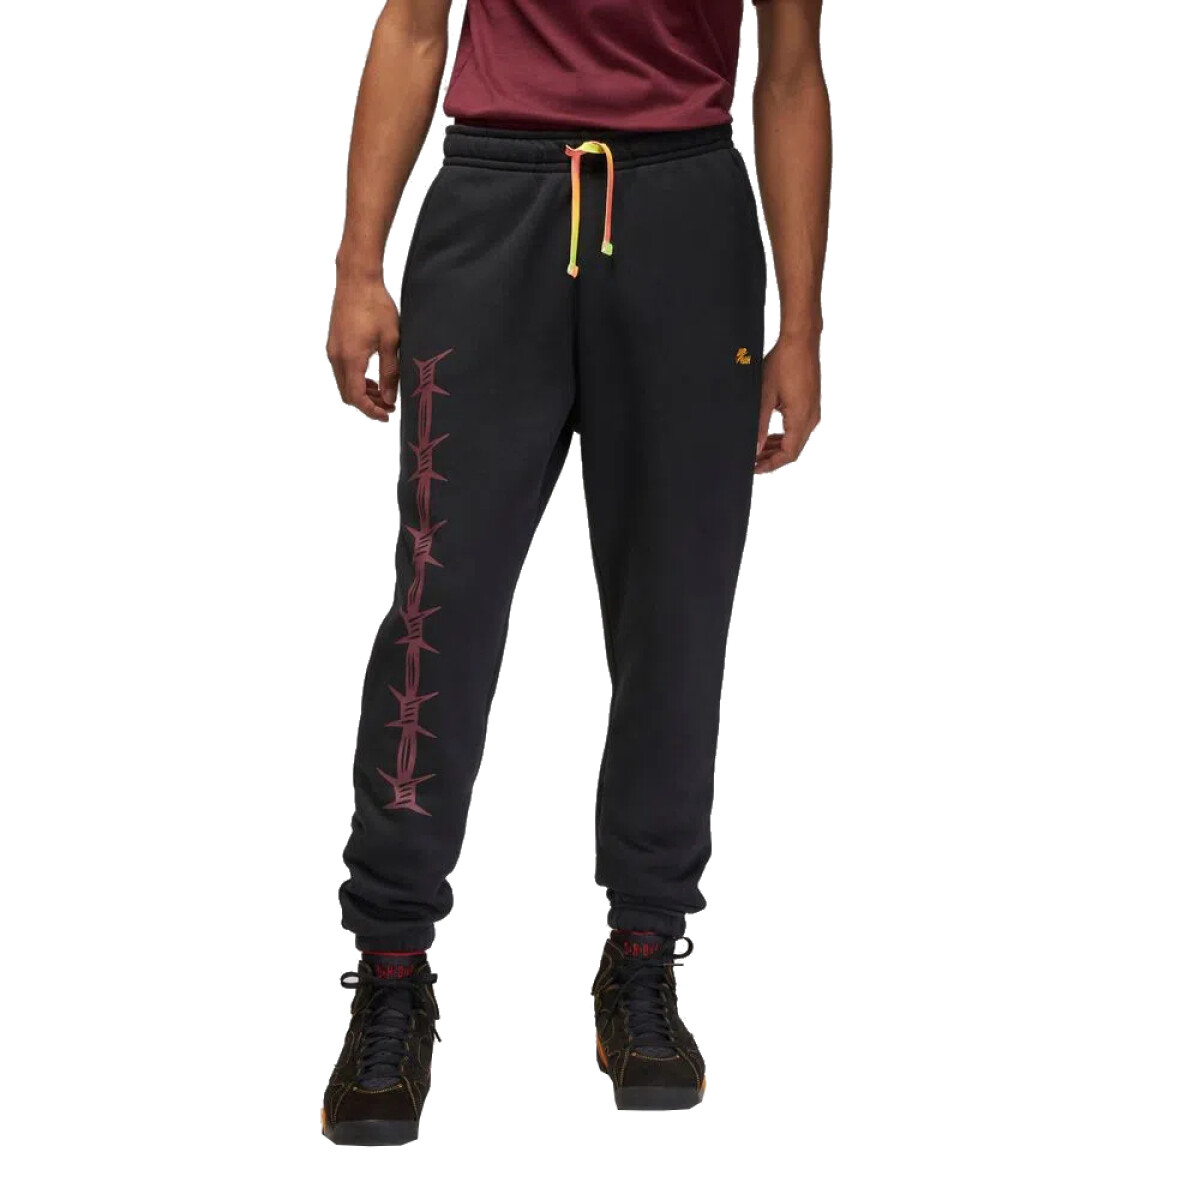 Pantalon Nike Jordan Hombre J Flt Mvp Stmt Gfx Flc Black/Cherrywood Red - S/C 